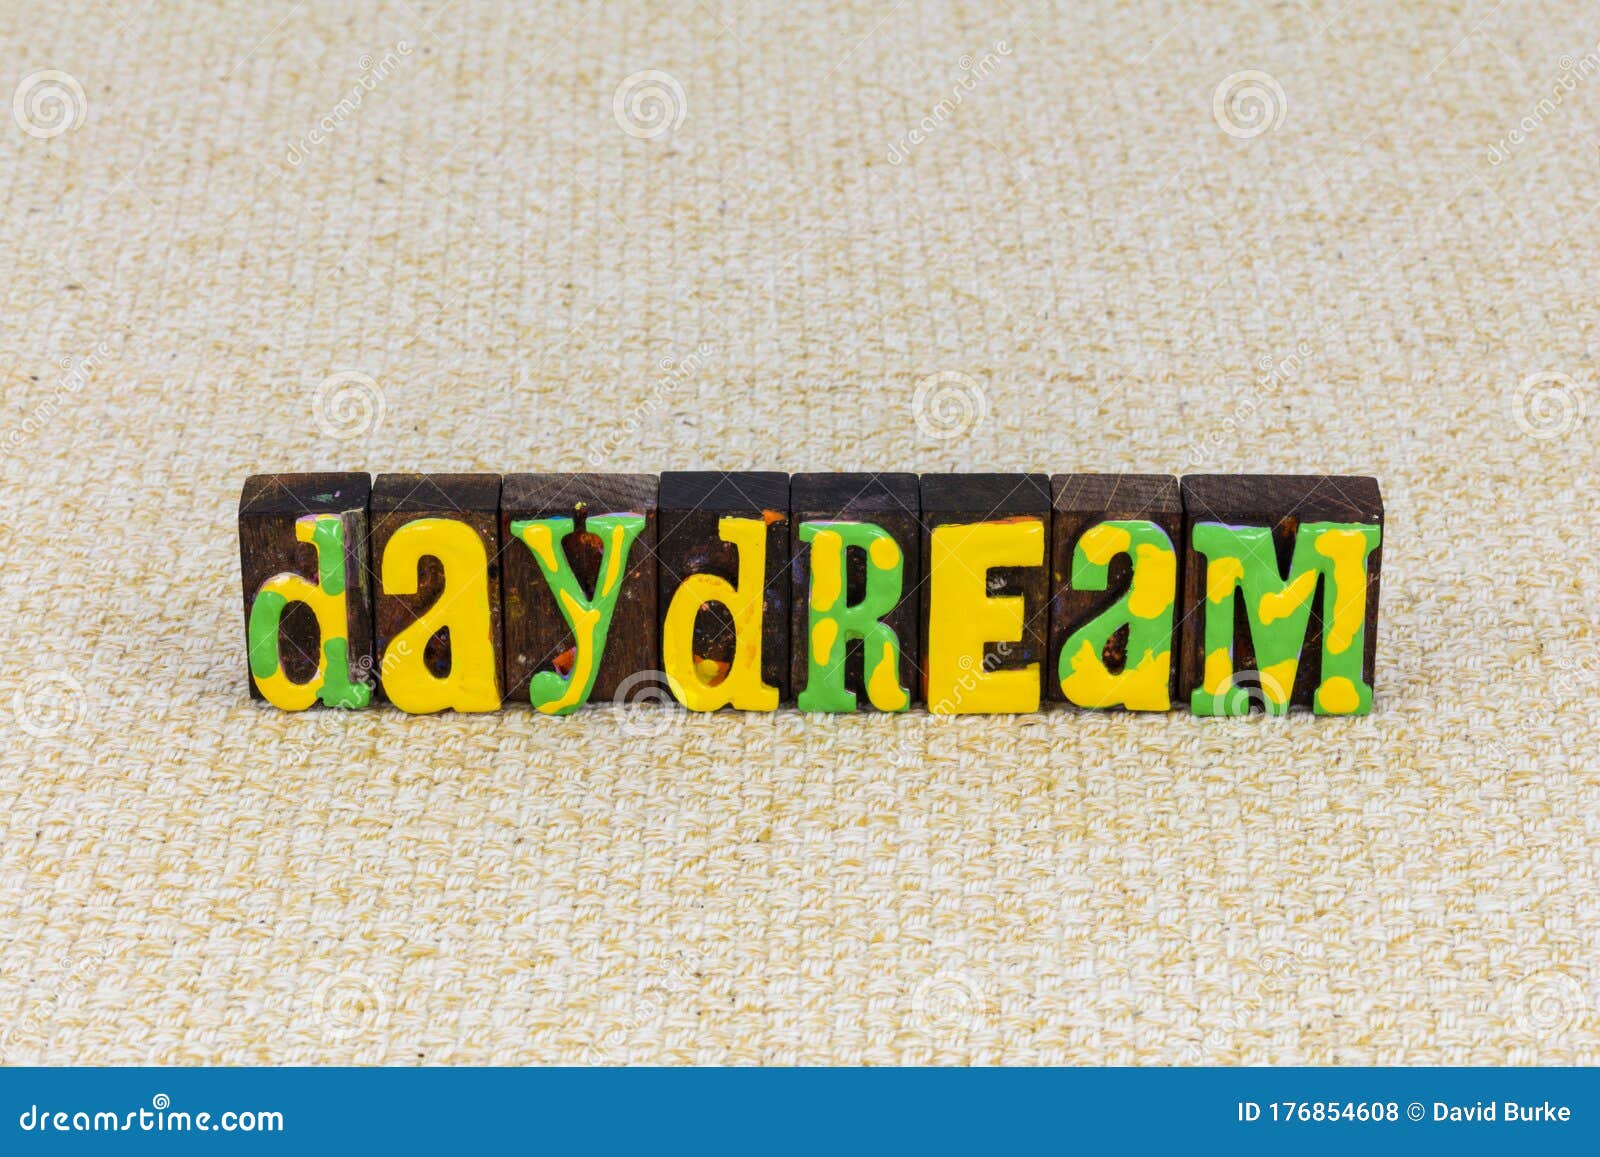 daydream believer dream on carefree imagination